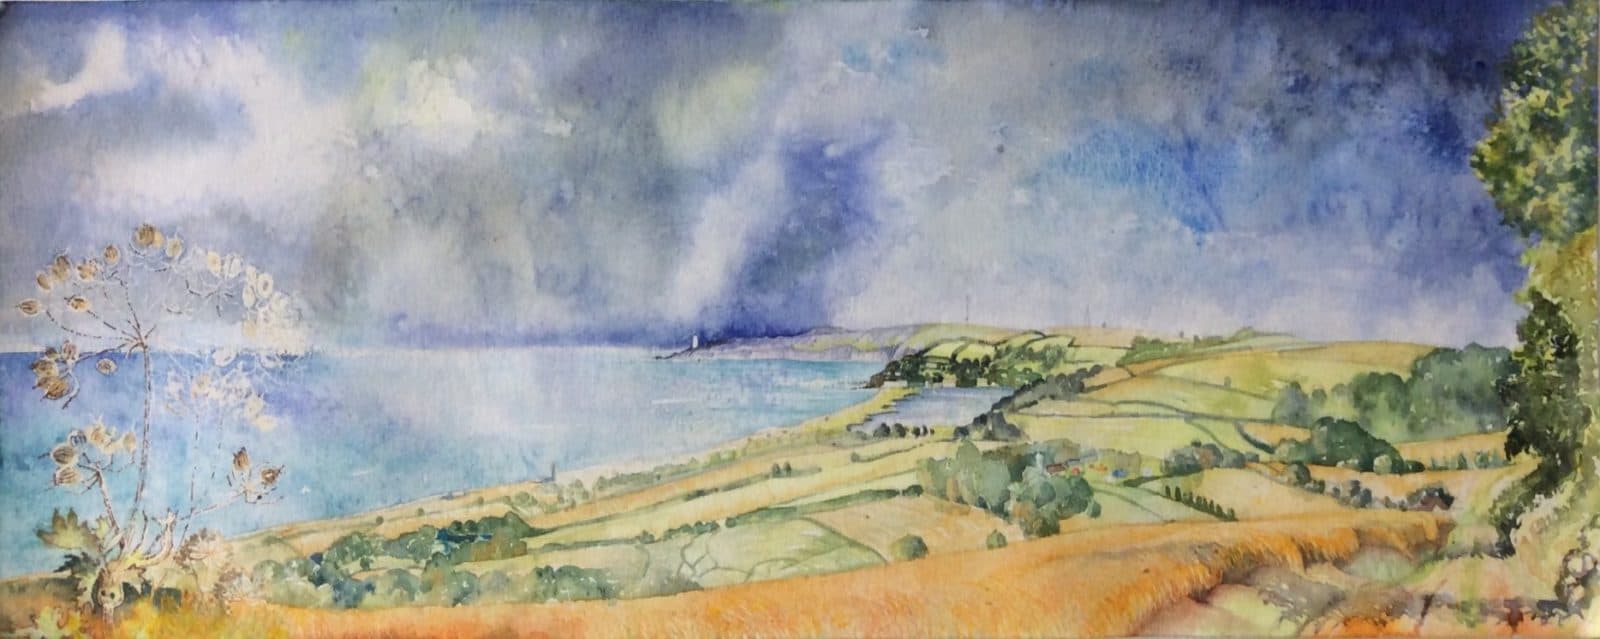 Oil Pastel Landscape for Beginners, an Introduction Class, Elisabetta  Furcht